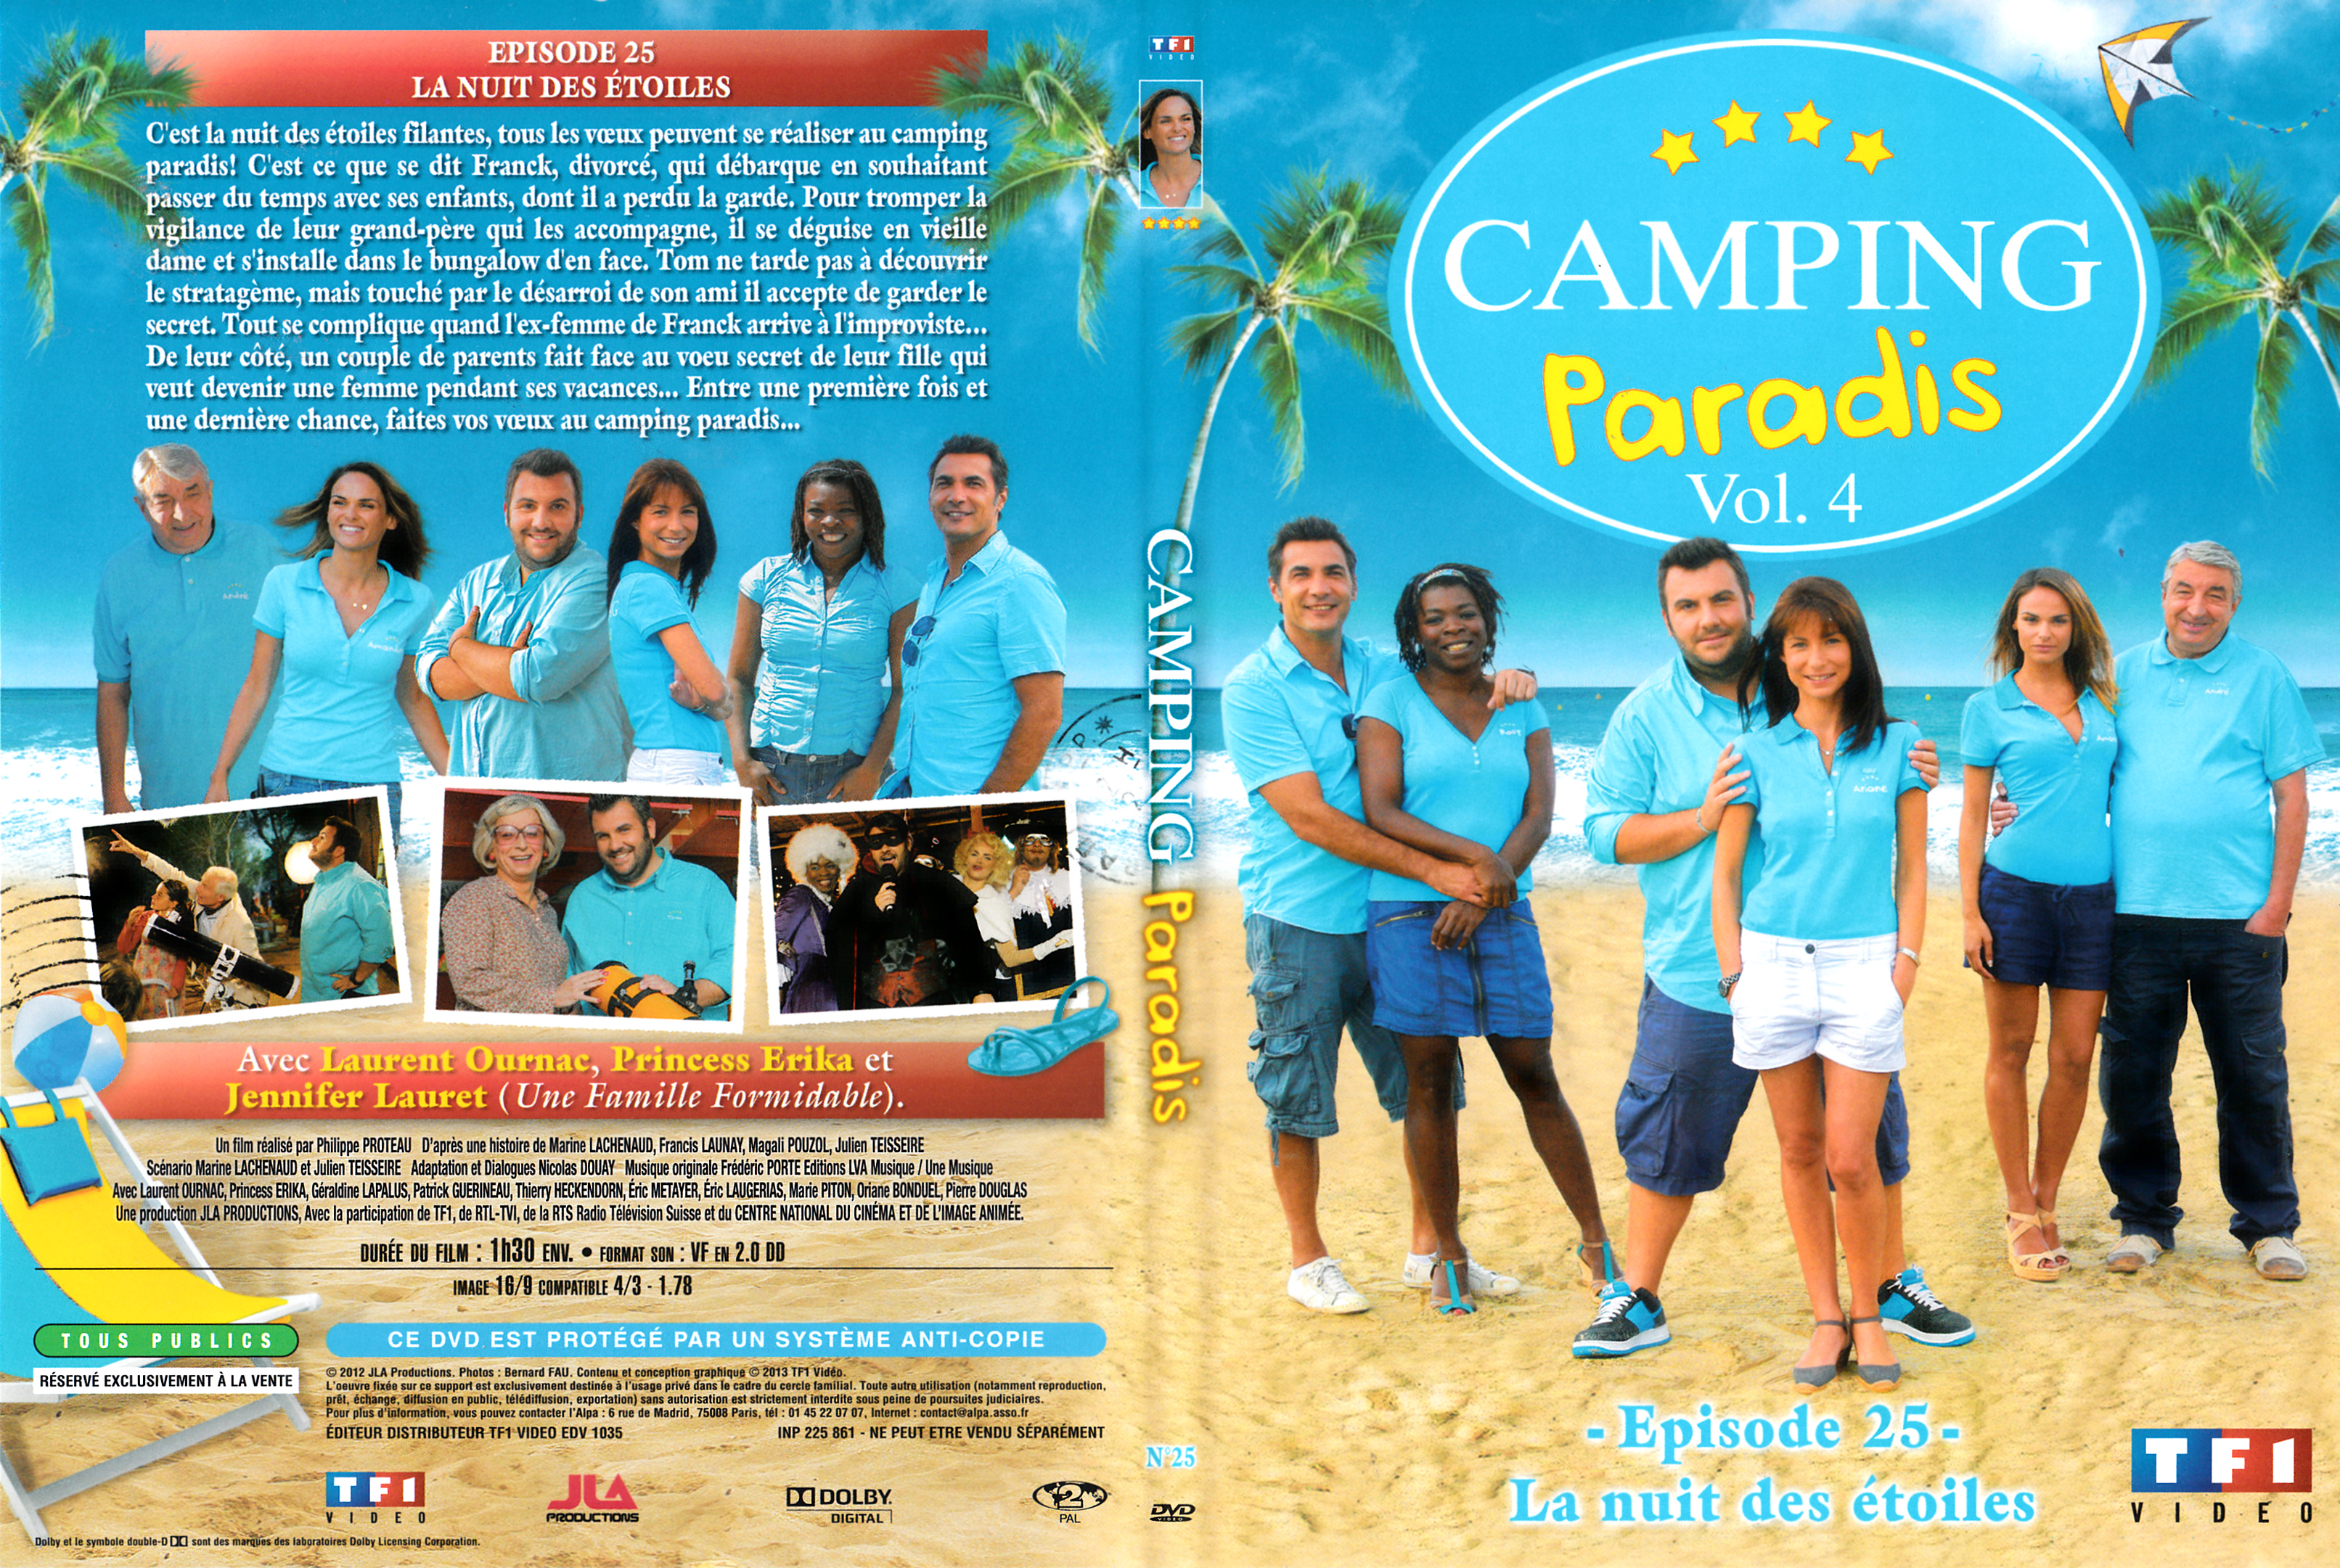 Jaquette DVD Camping Paradis vol 25